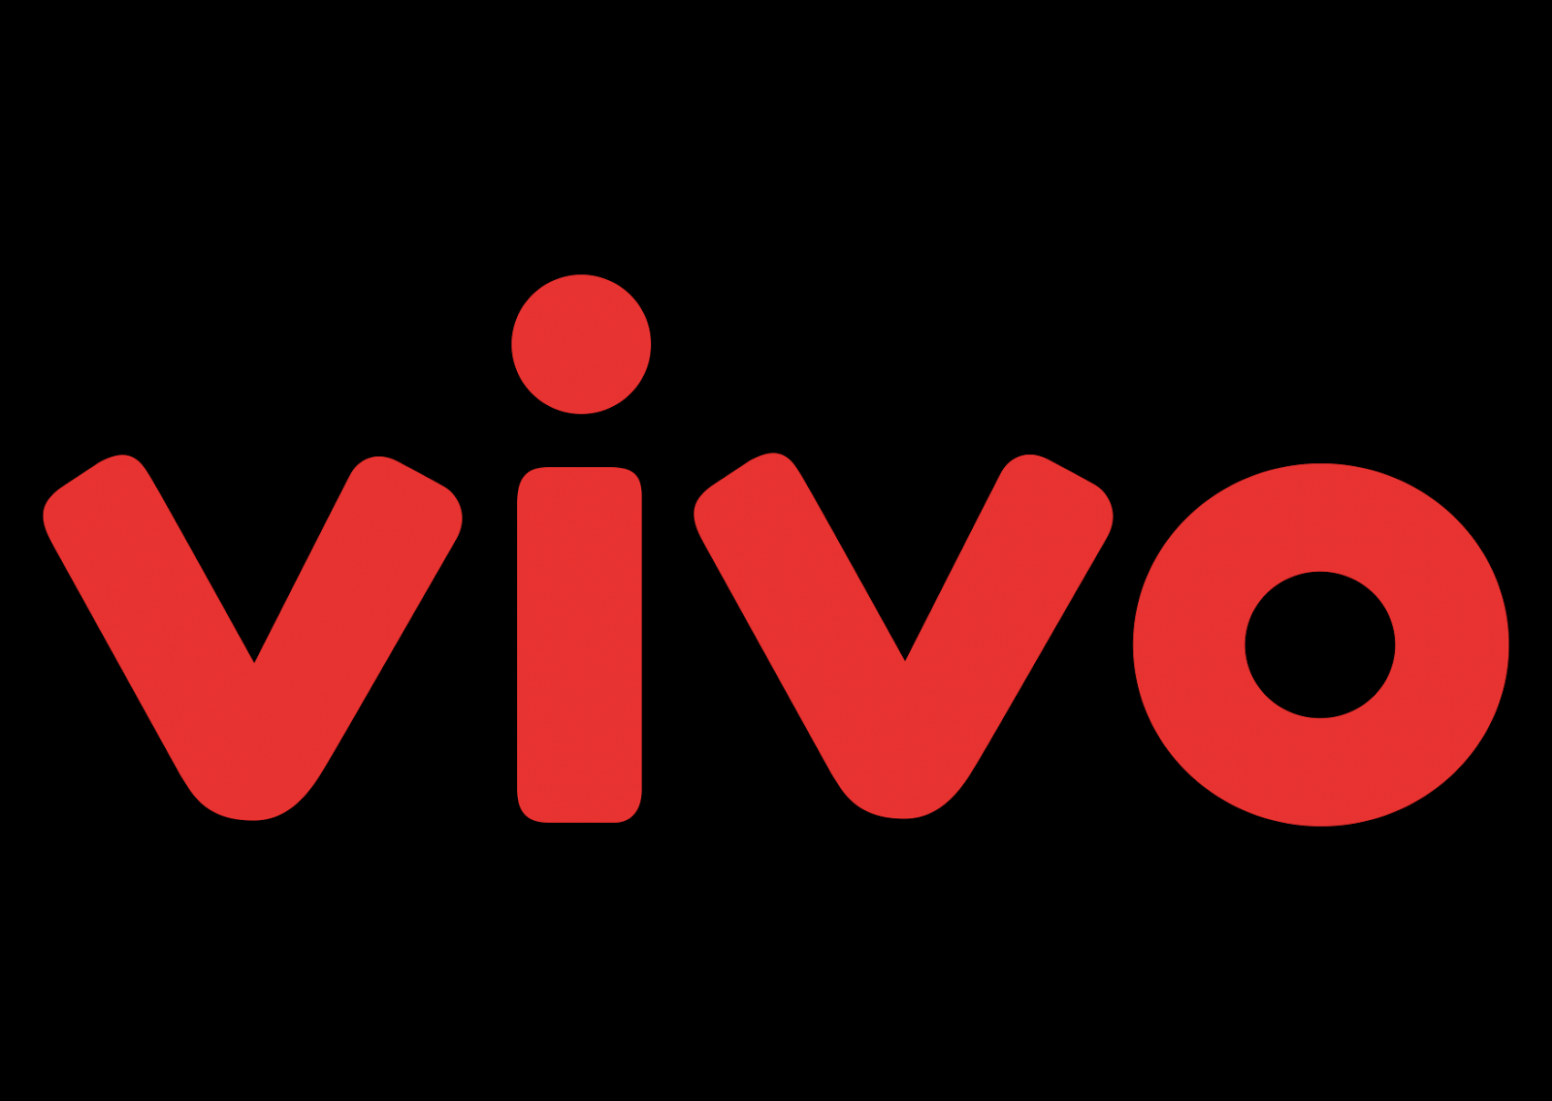 Vivo Logo - Most Effective Ways To Overcome Vivo Company Logo's